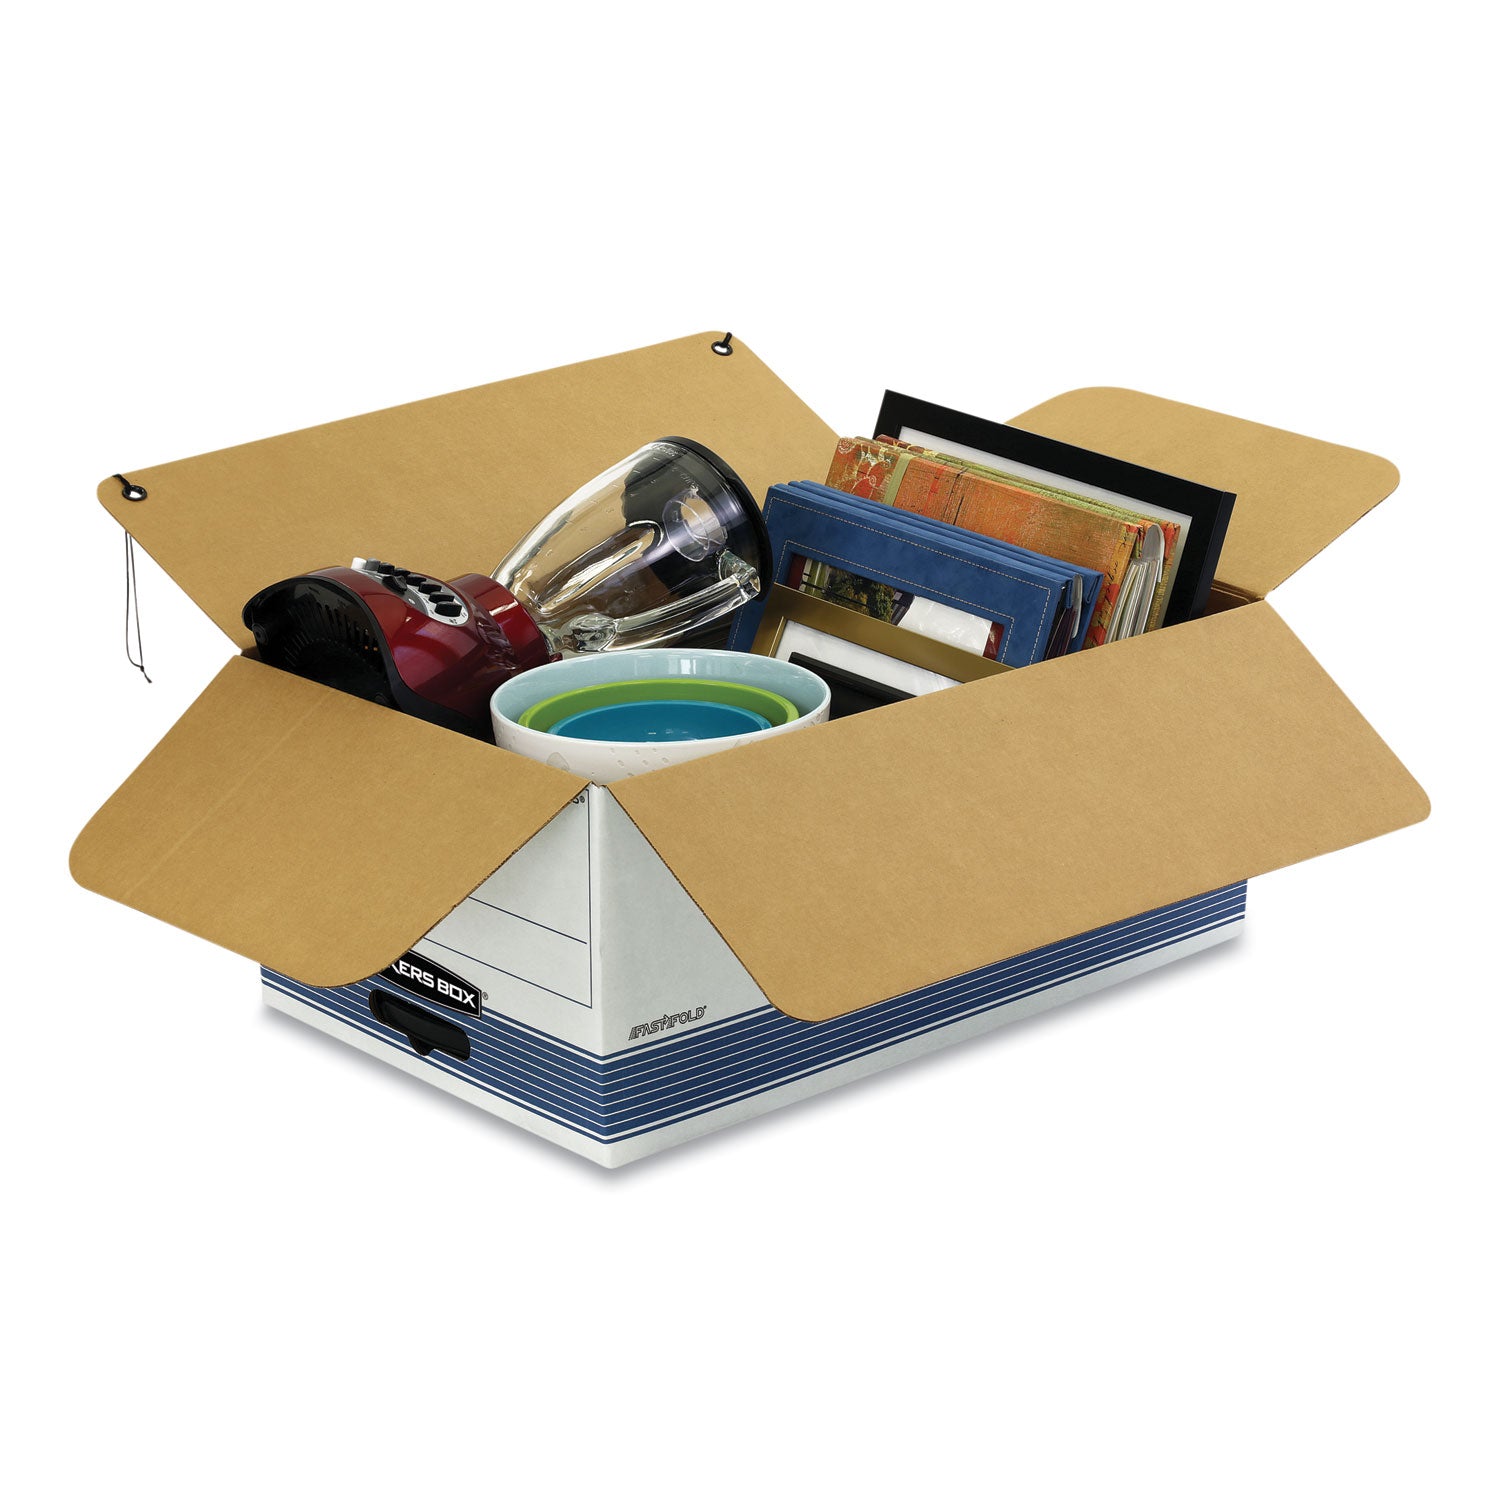 STOR/FILE Medium-Duty Strength Storage Boxes, Legal Files, 15.25" x 24.13" x 10.75", White/Blue, 12/Carton - 